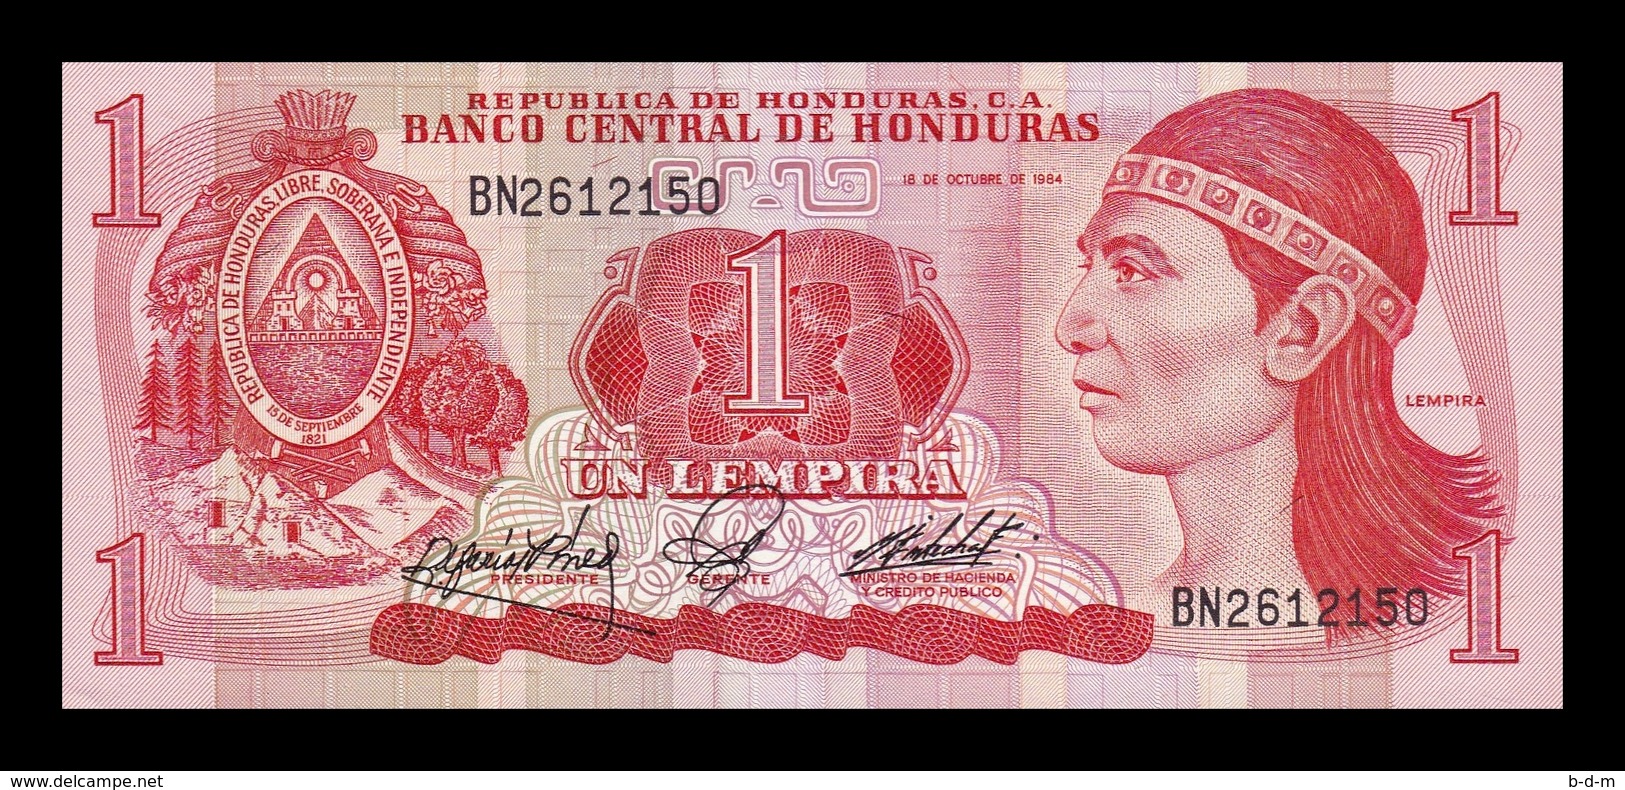 Honduras 1 Lempira 1984 Pick 68b SC UNC - Honduras